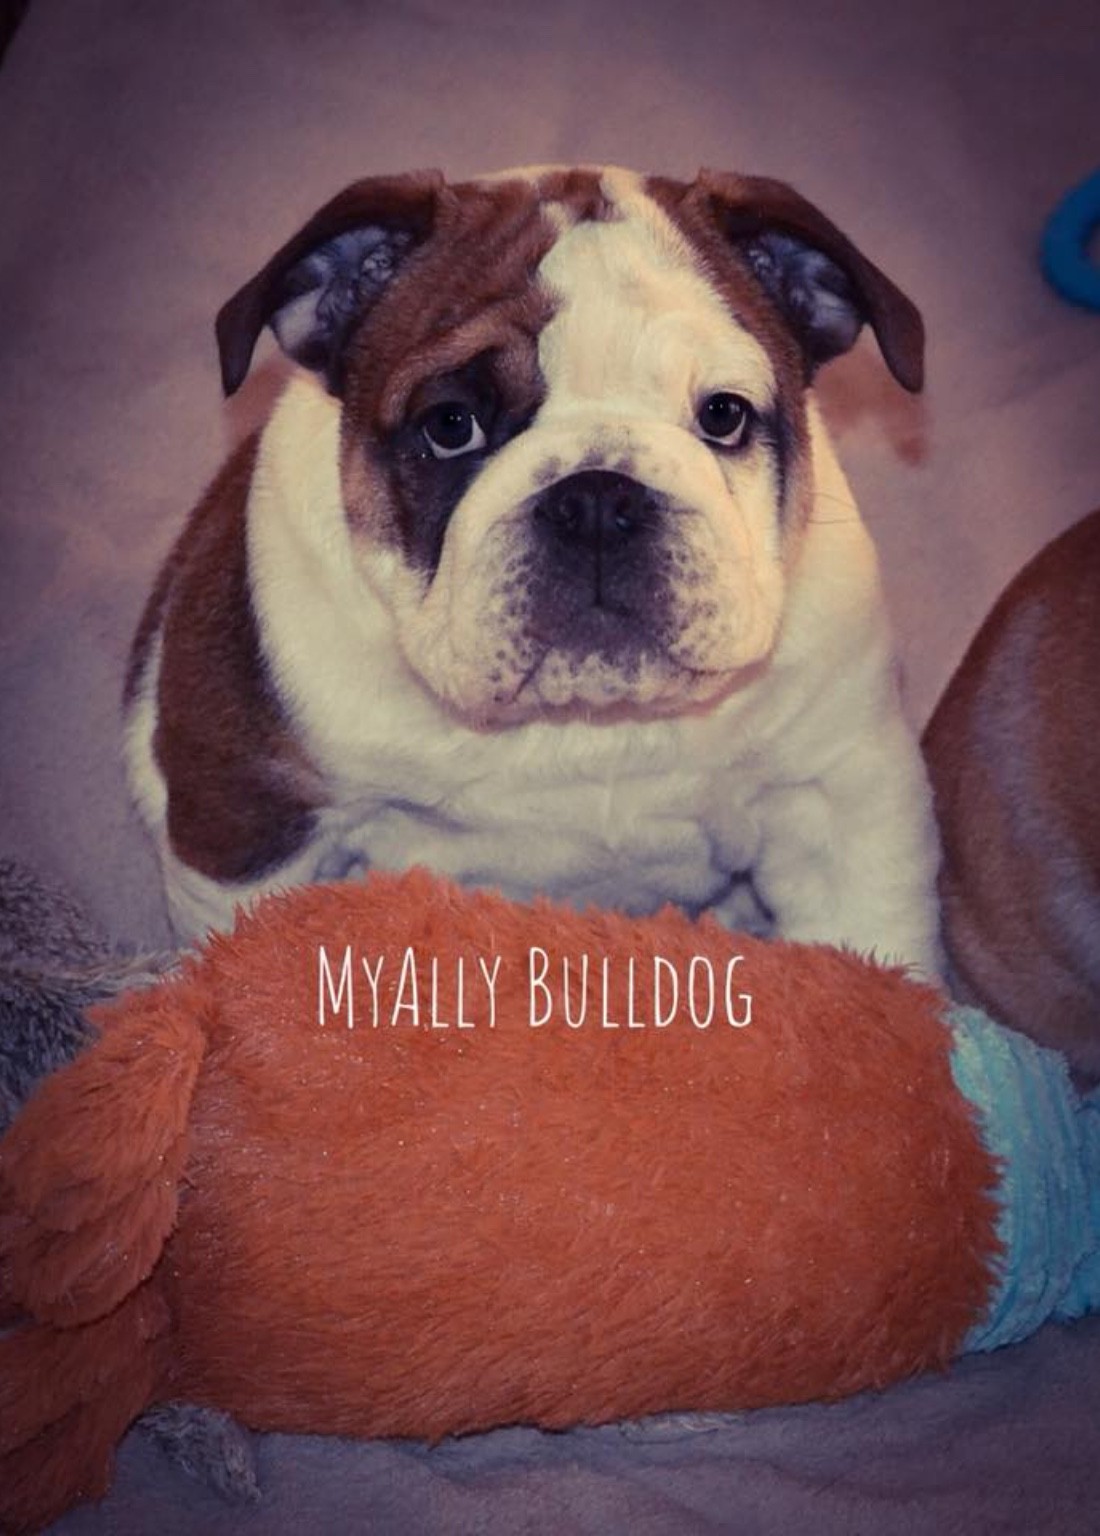 Myally Bulldog